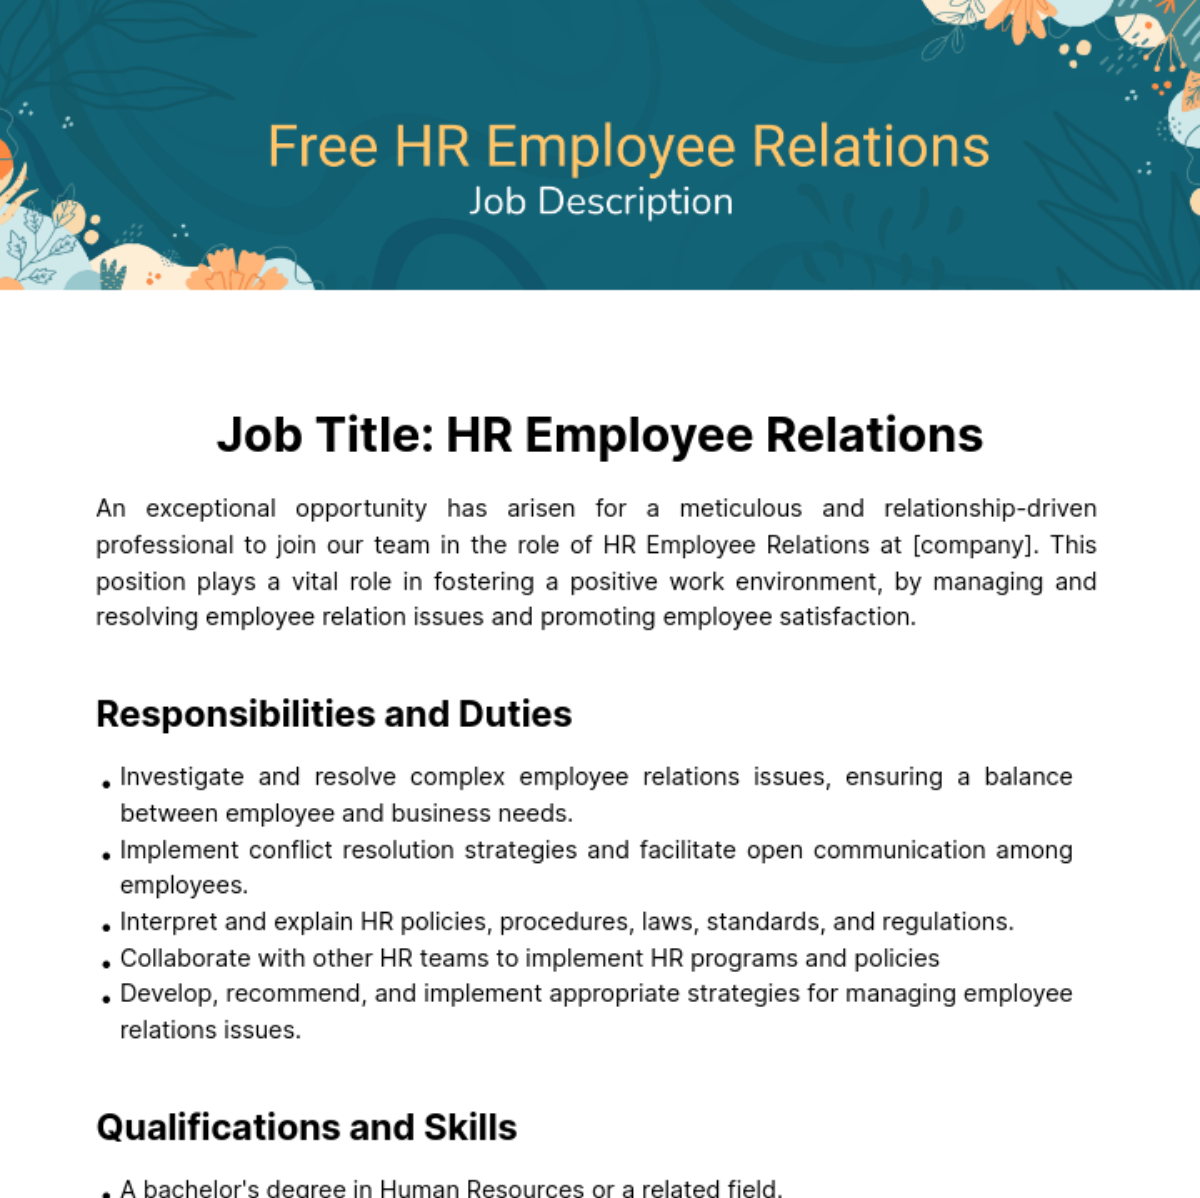 Human Resources (HR) Employee Relations Job Description Template